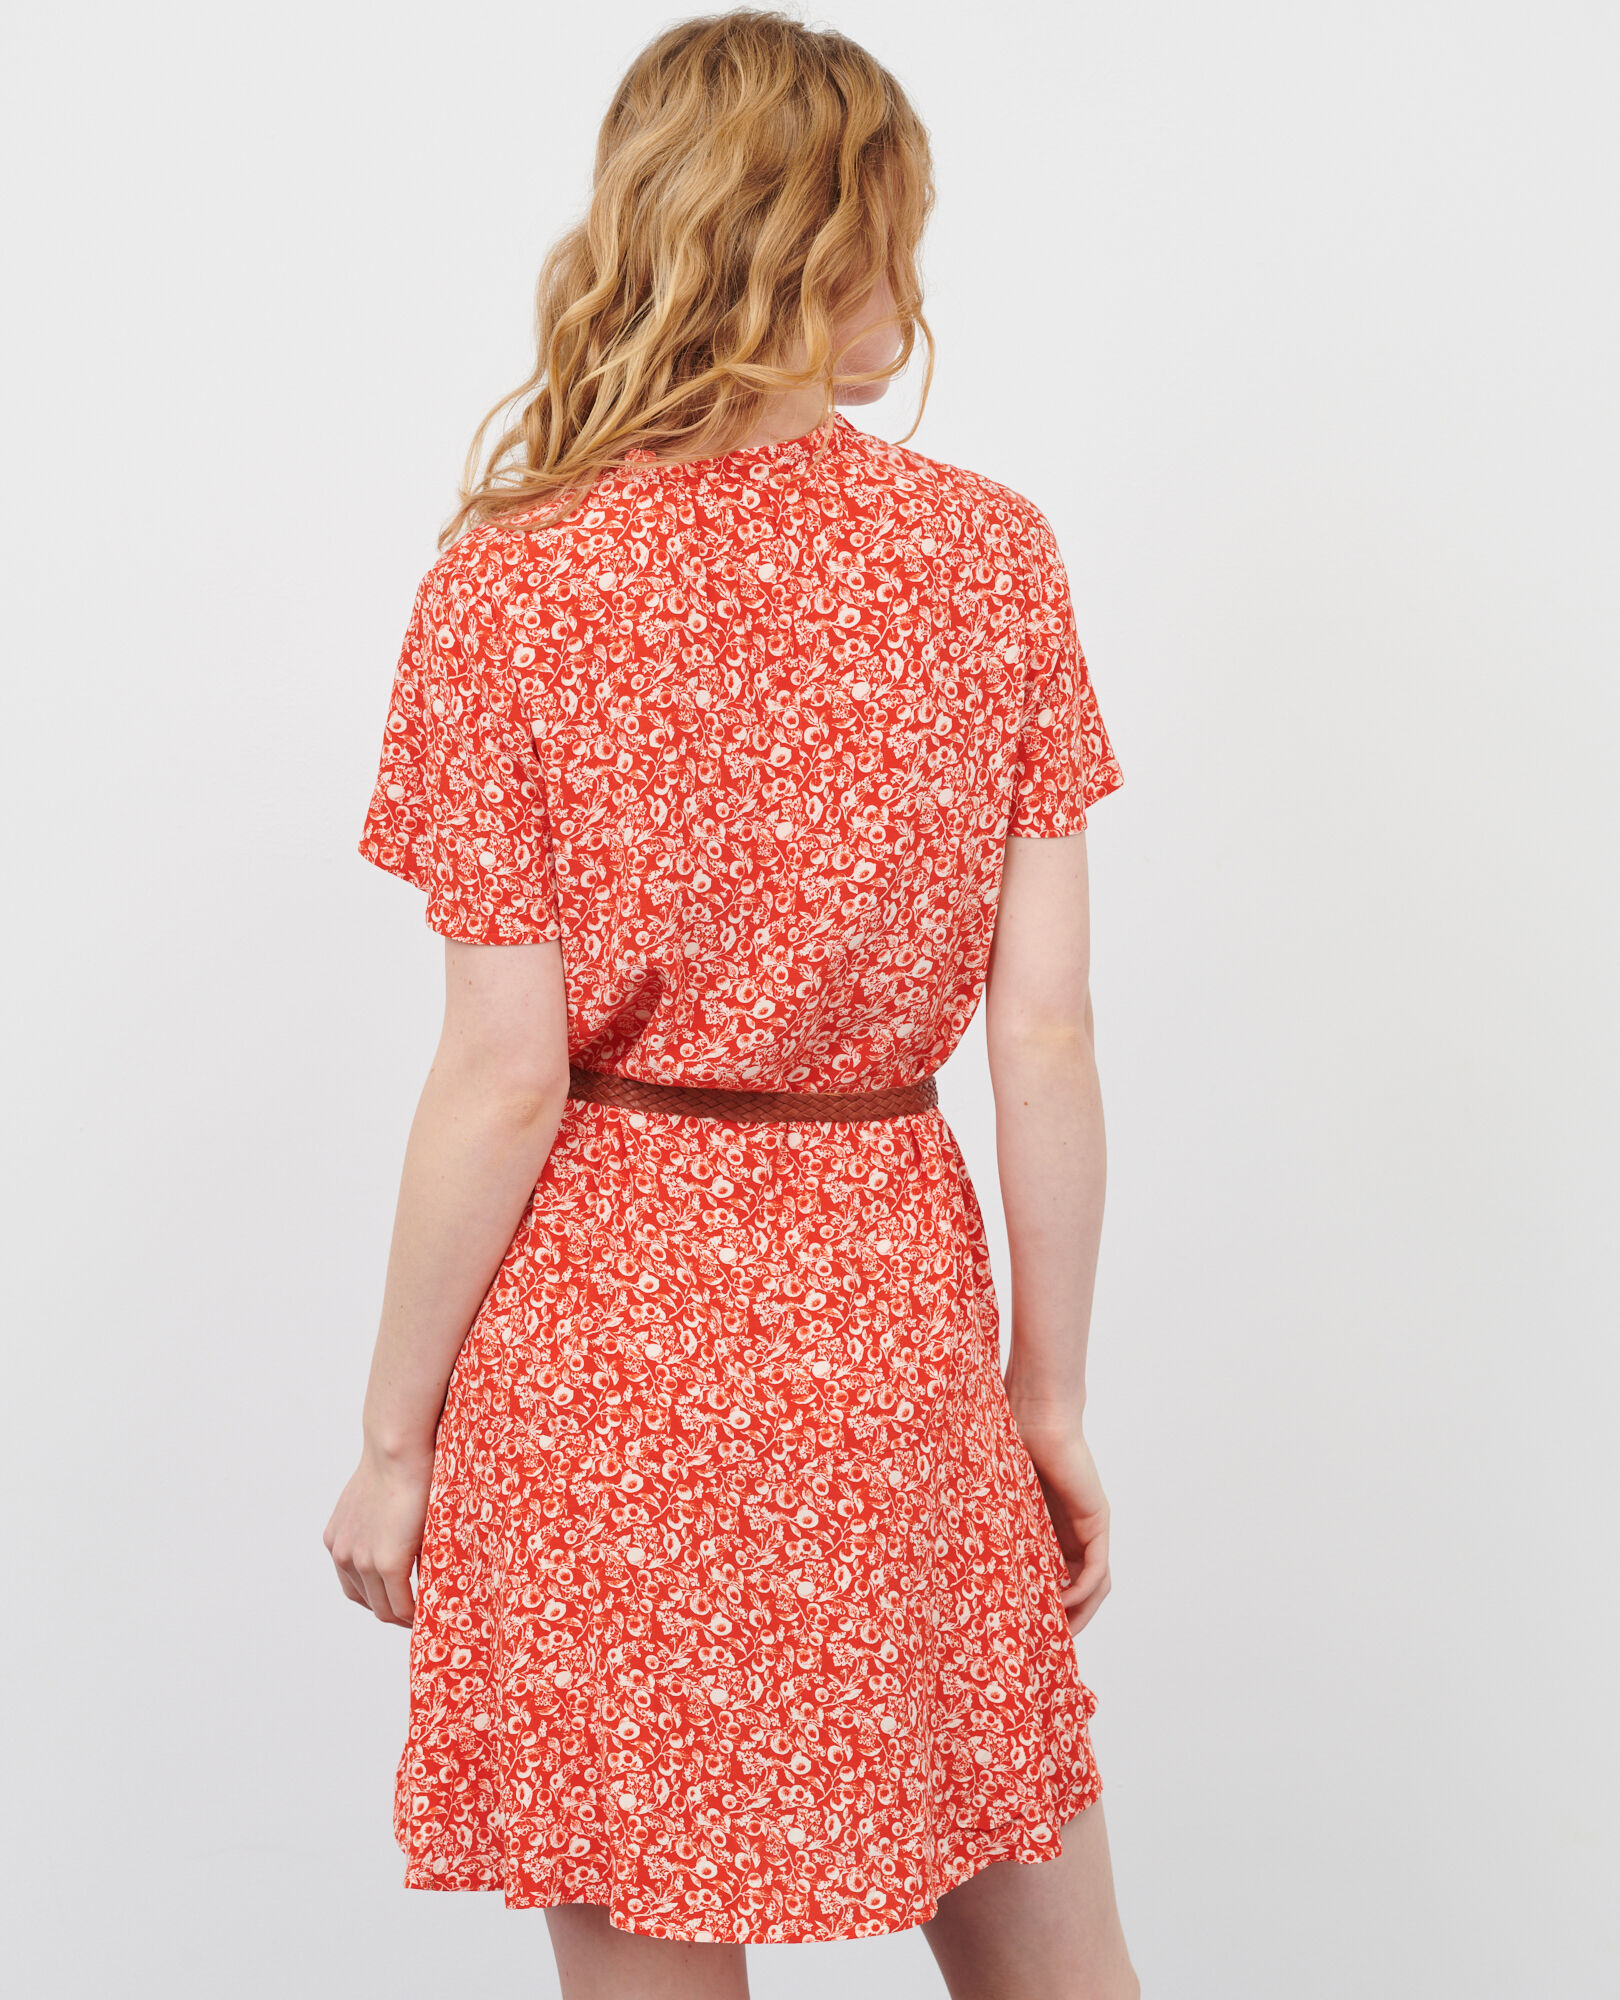 Kurzes Kleid 101 print red 2sdr255v02